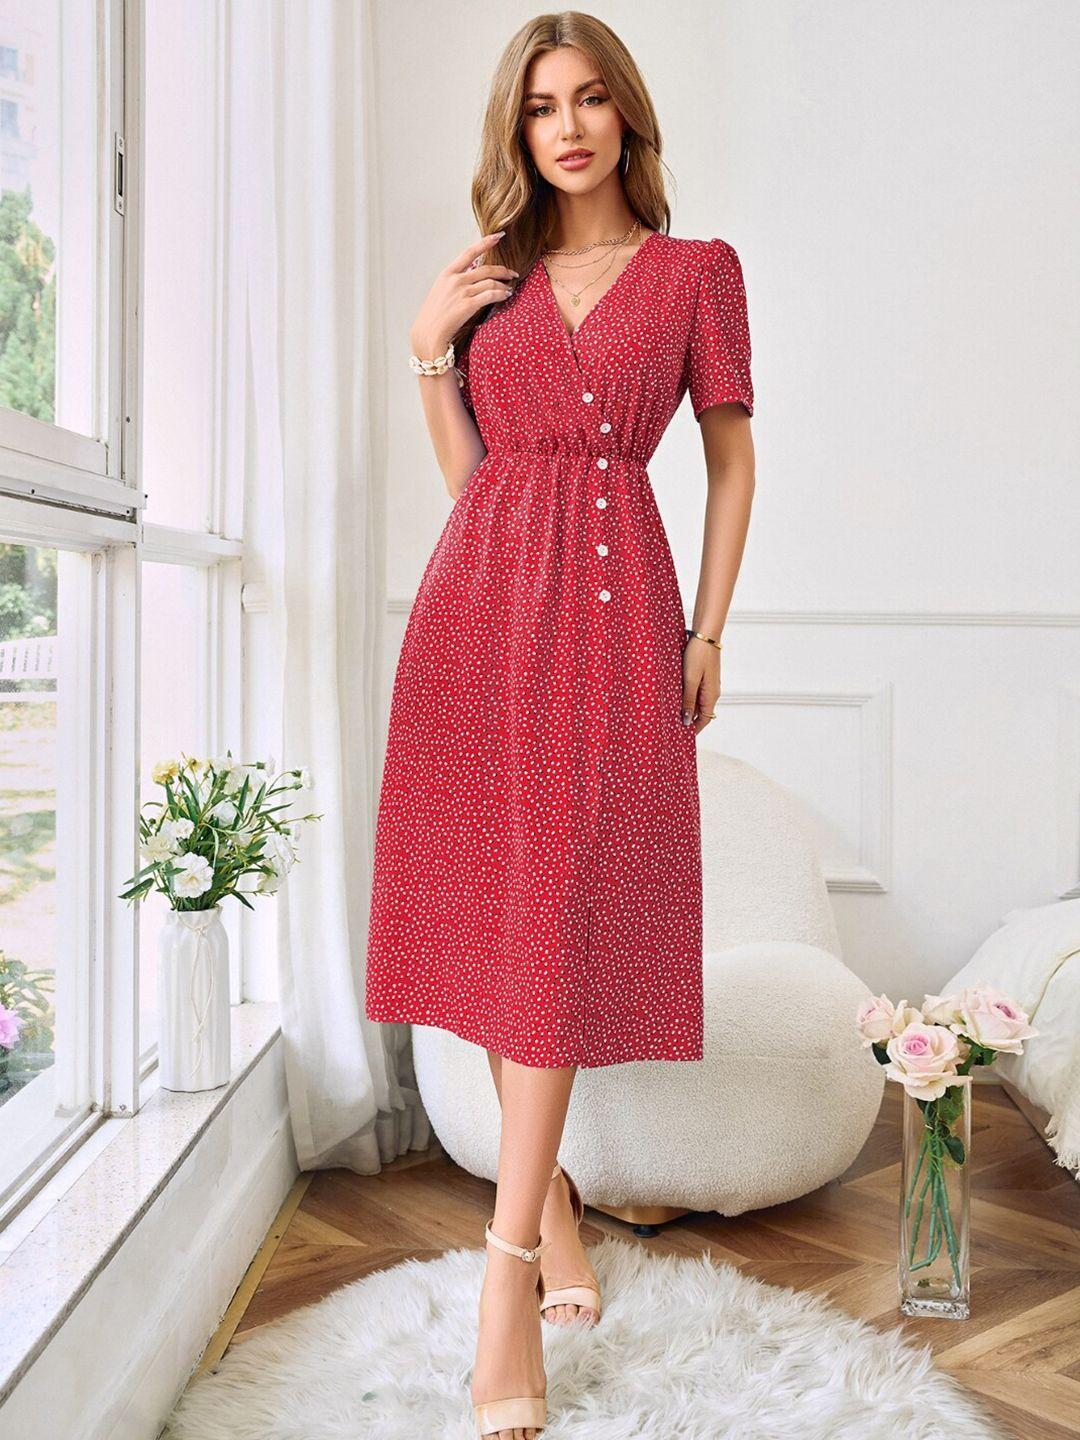 stylecast red floral print a-line midi dress